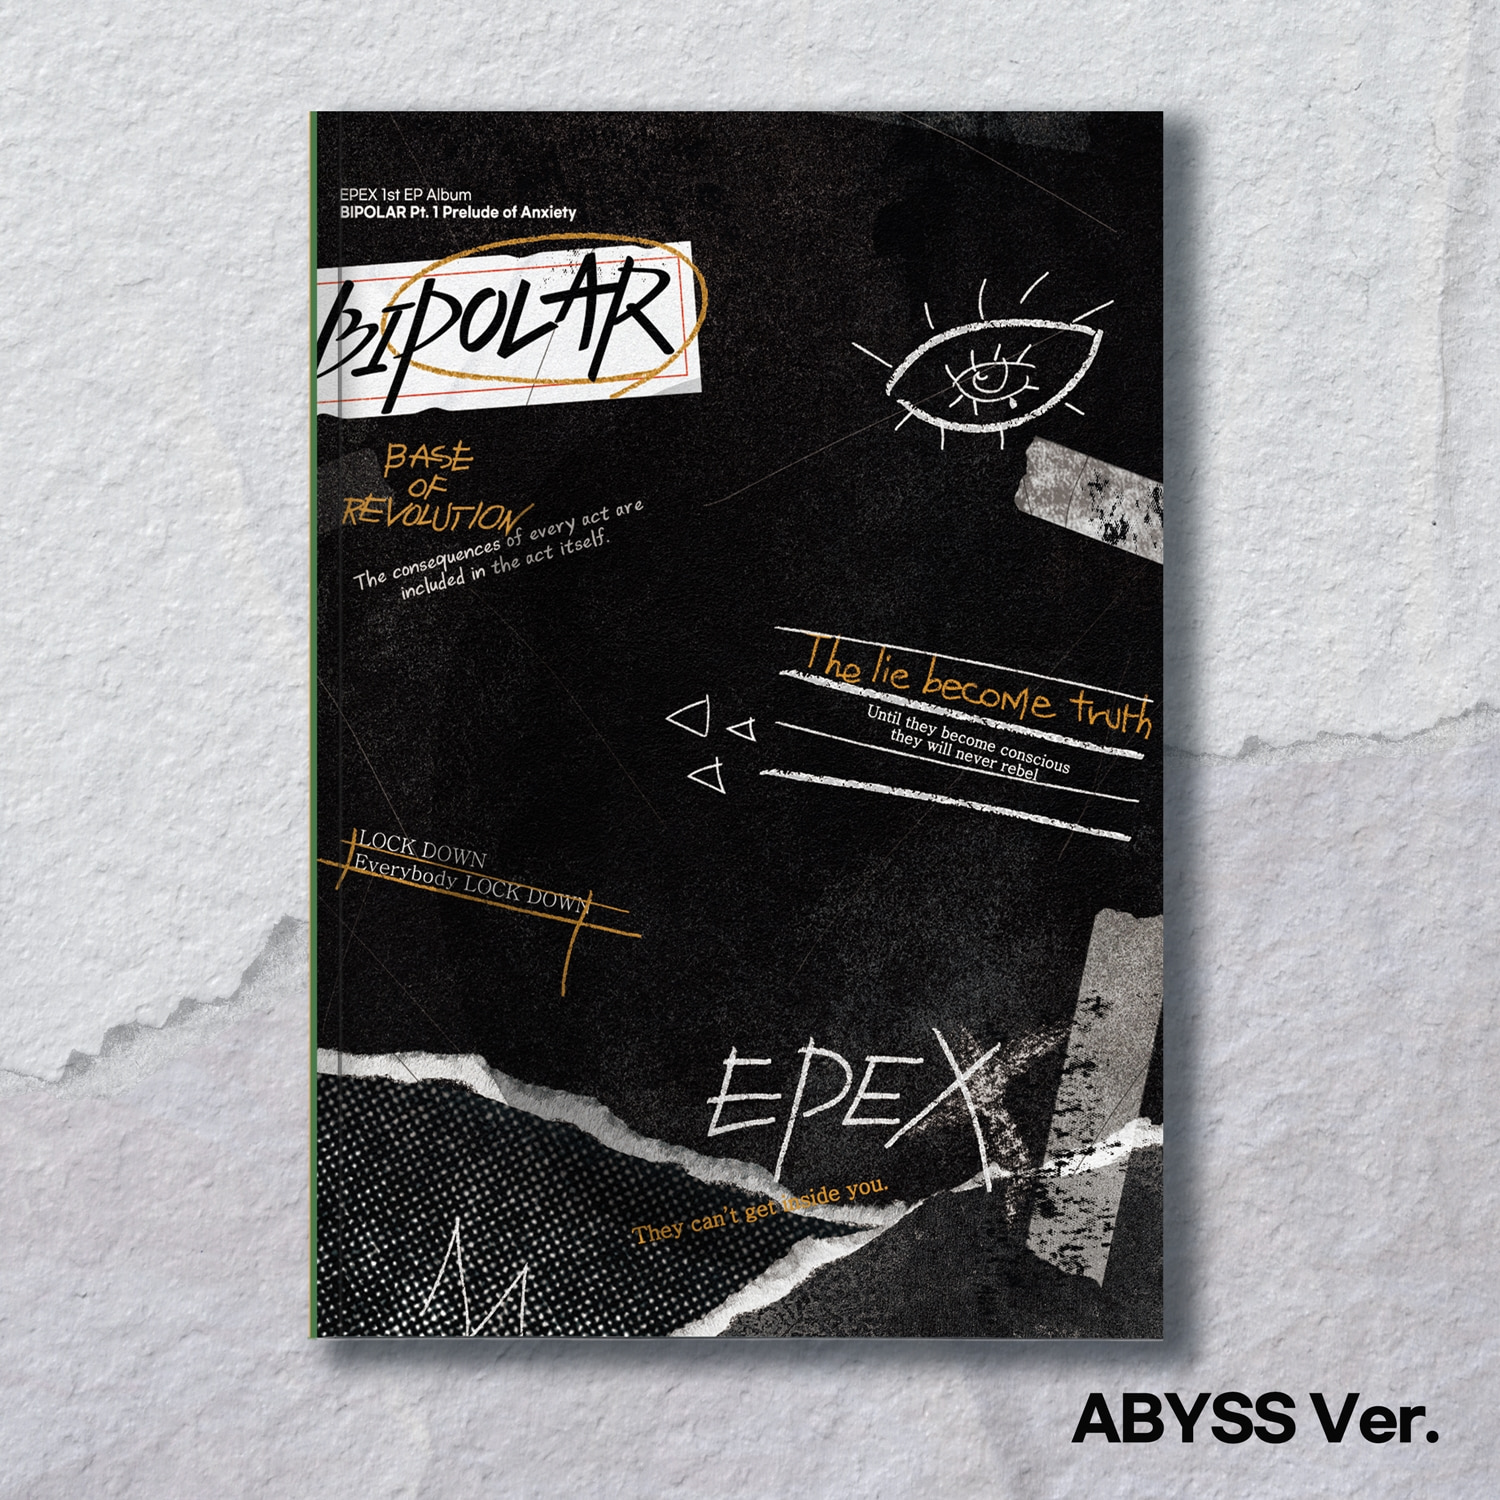 EPEX(이펙스) - 1st EP Album [Bipolar Pt.1 불안의 서] (ABYSS ver.)케이팝스토어(kpop store)